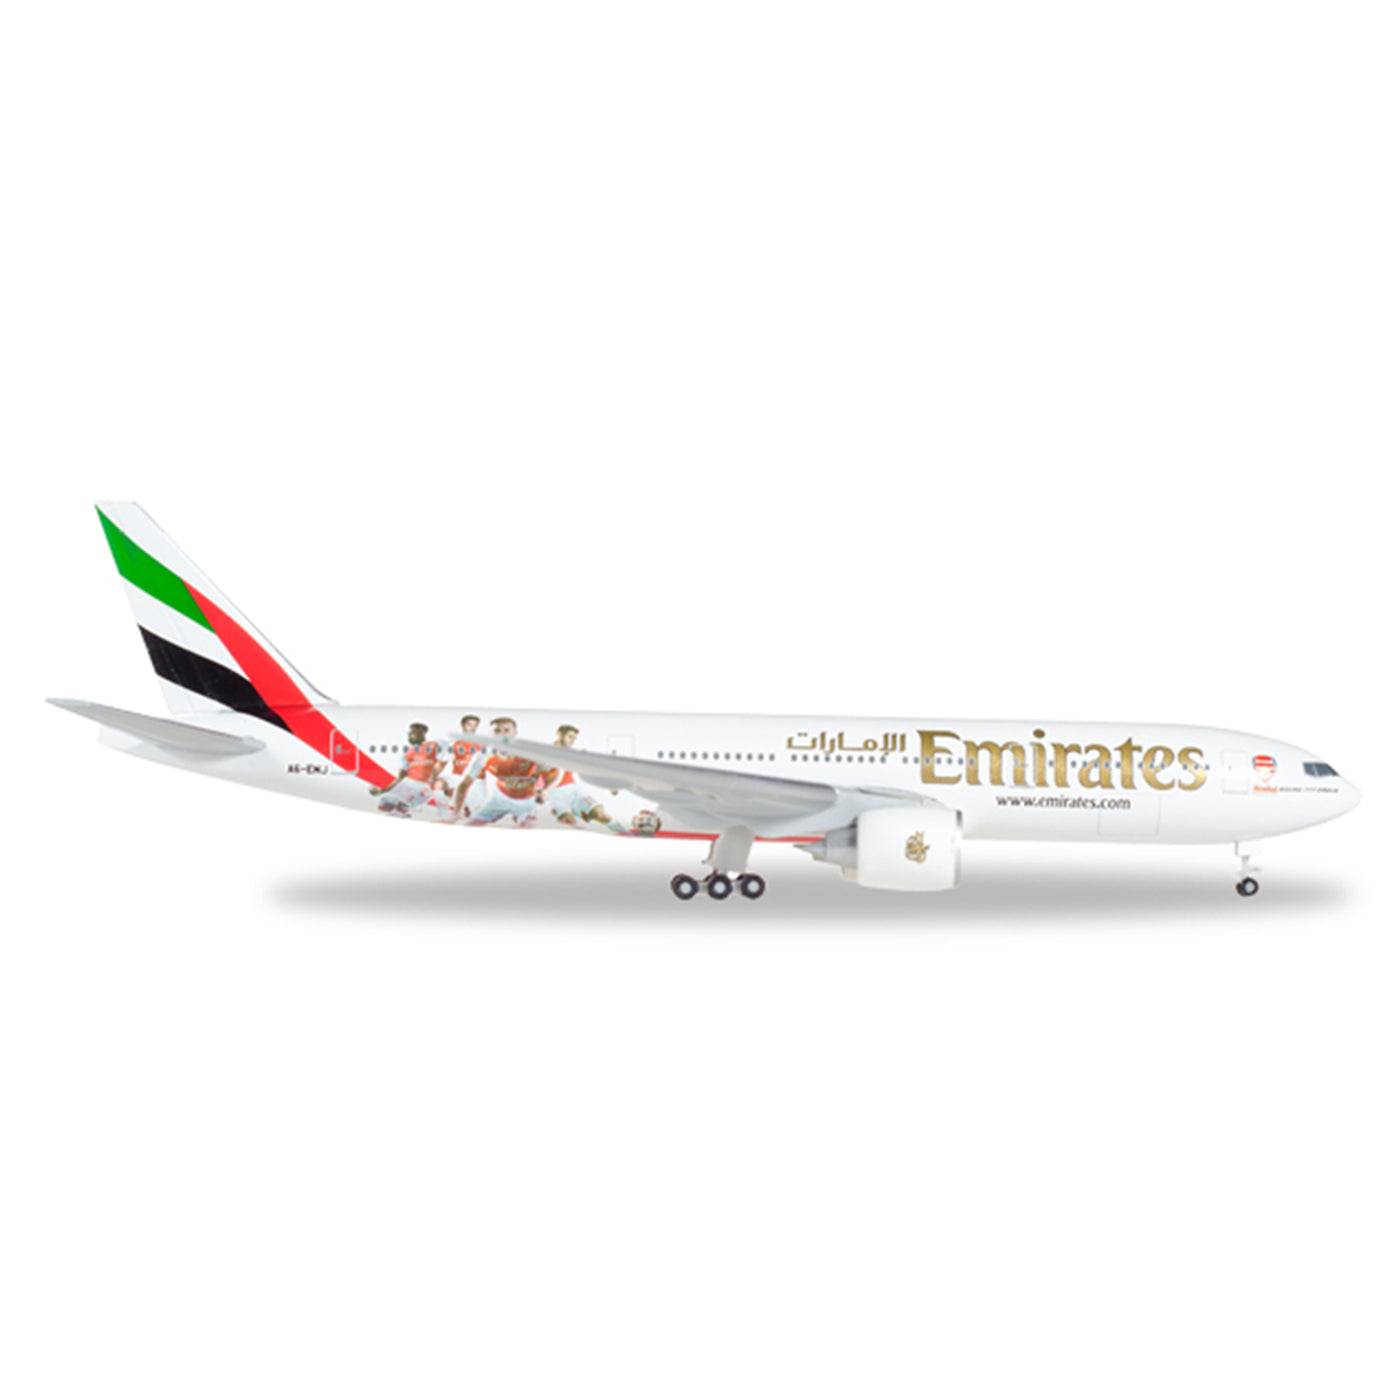 1/500 B777200LR Emirates Arsenal Londo